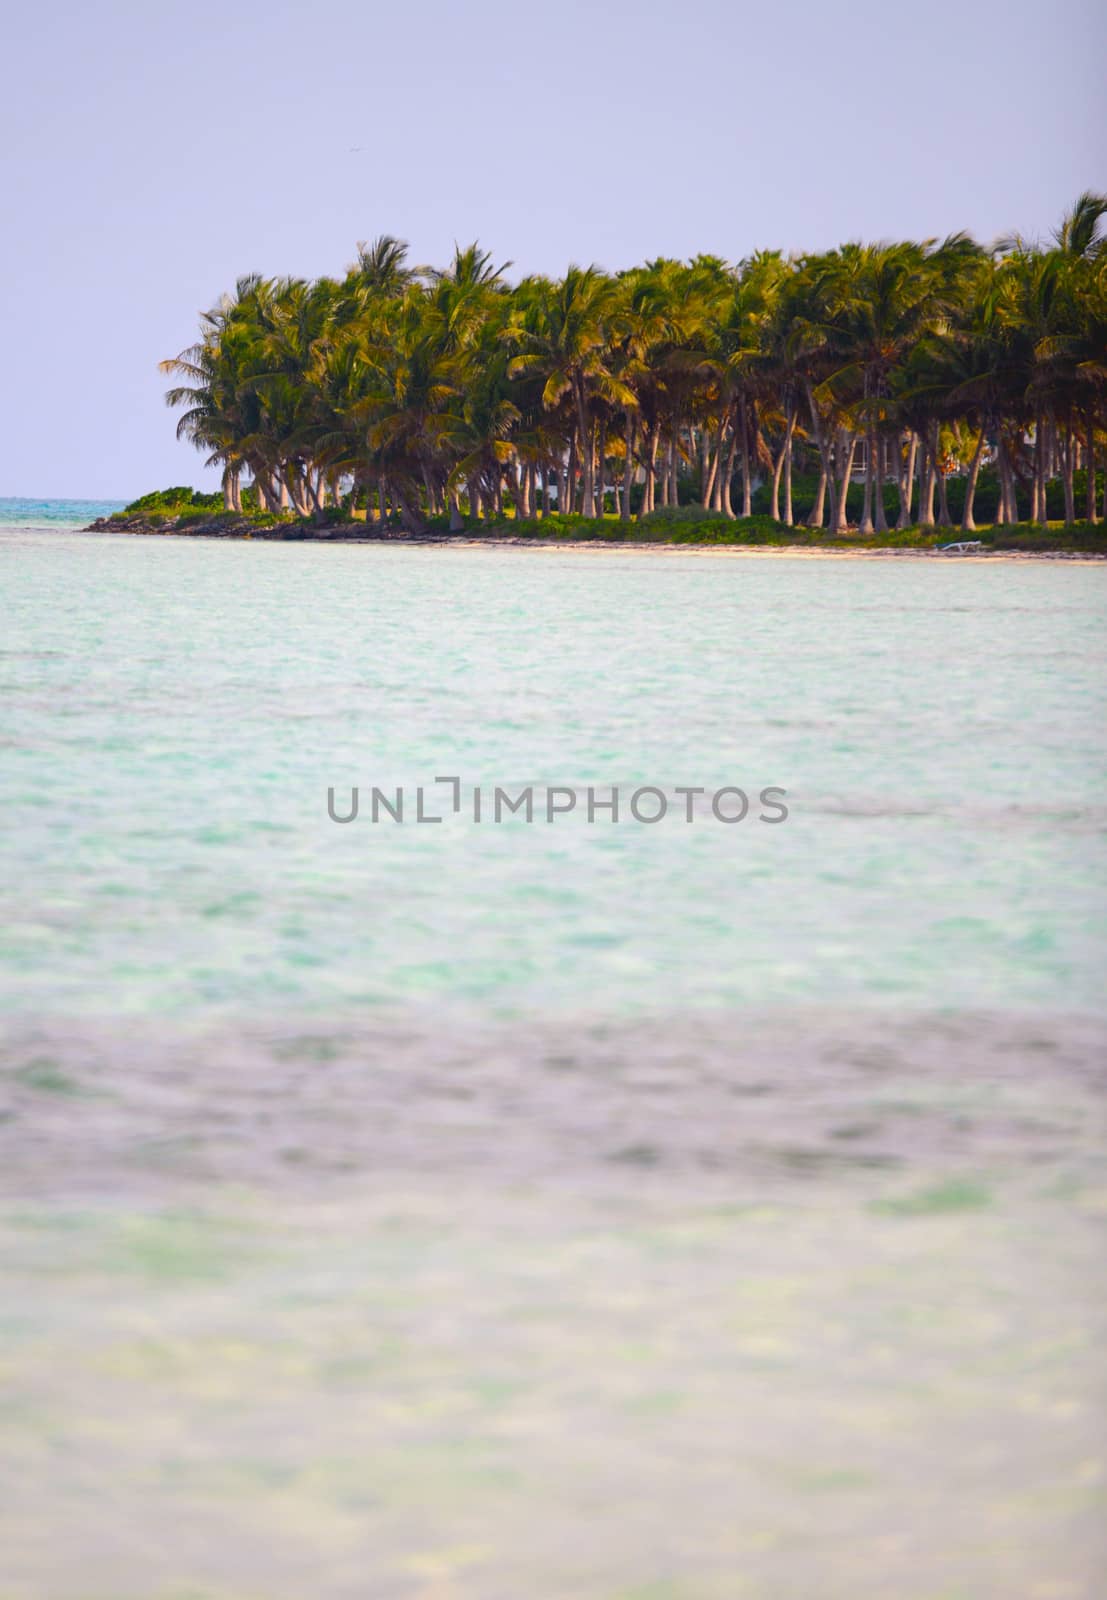 Tropical island in the Bahamas